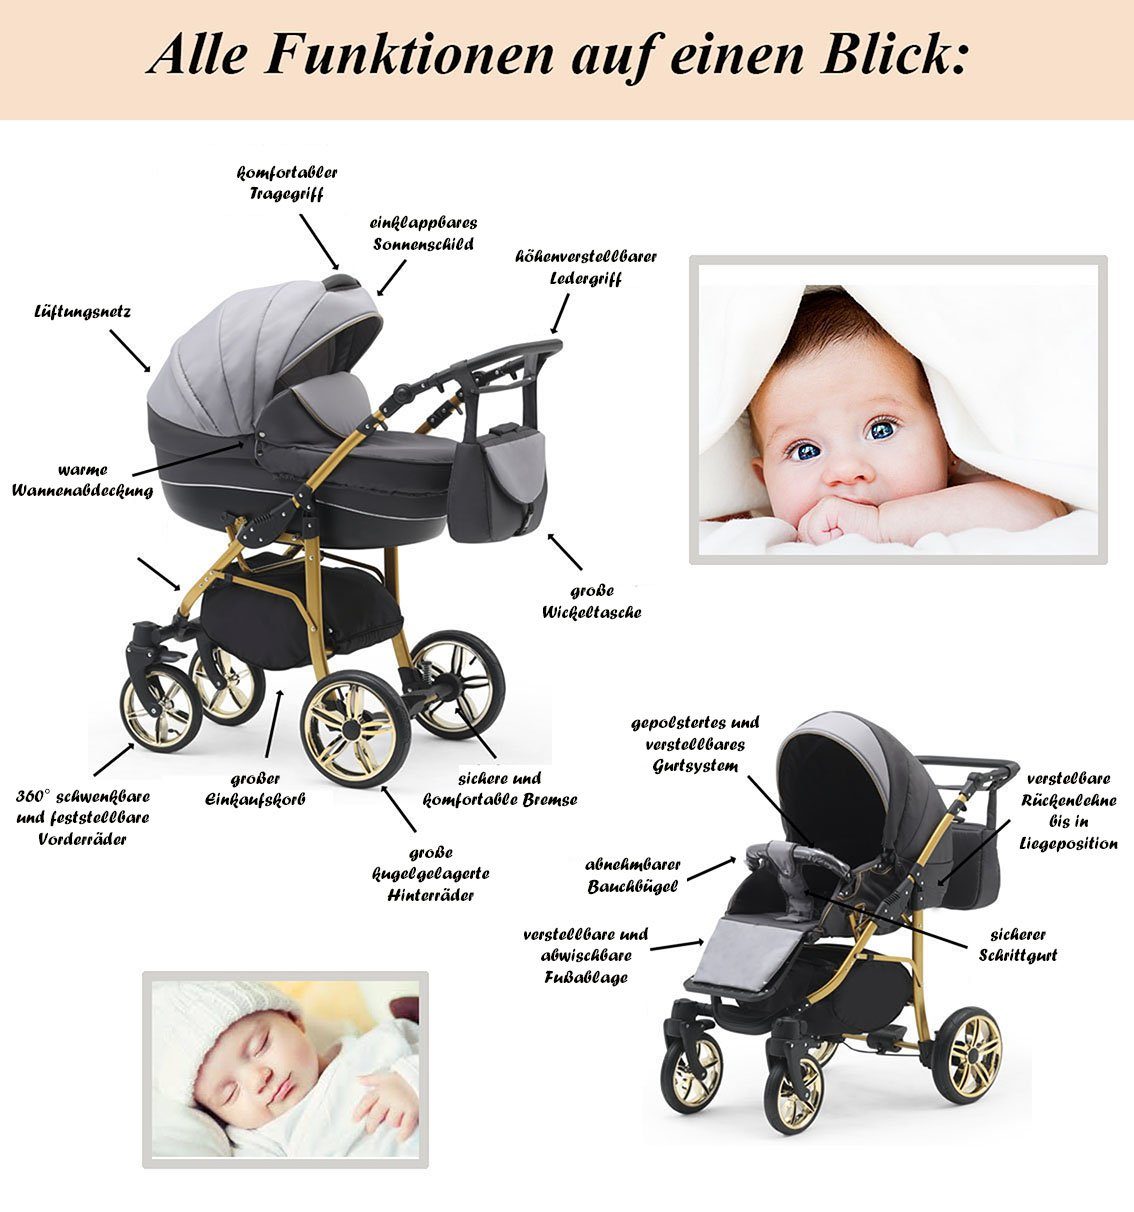 babies-on-wheels Kombi-Kinderwagen in 1 - ECO Farben Pink-Schwarz-Schwarz - Cosmo Kinderwagen-Set 2 in Teile 13 46 Gold